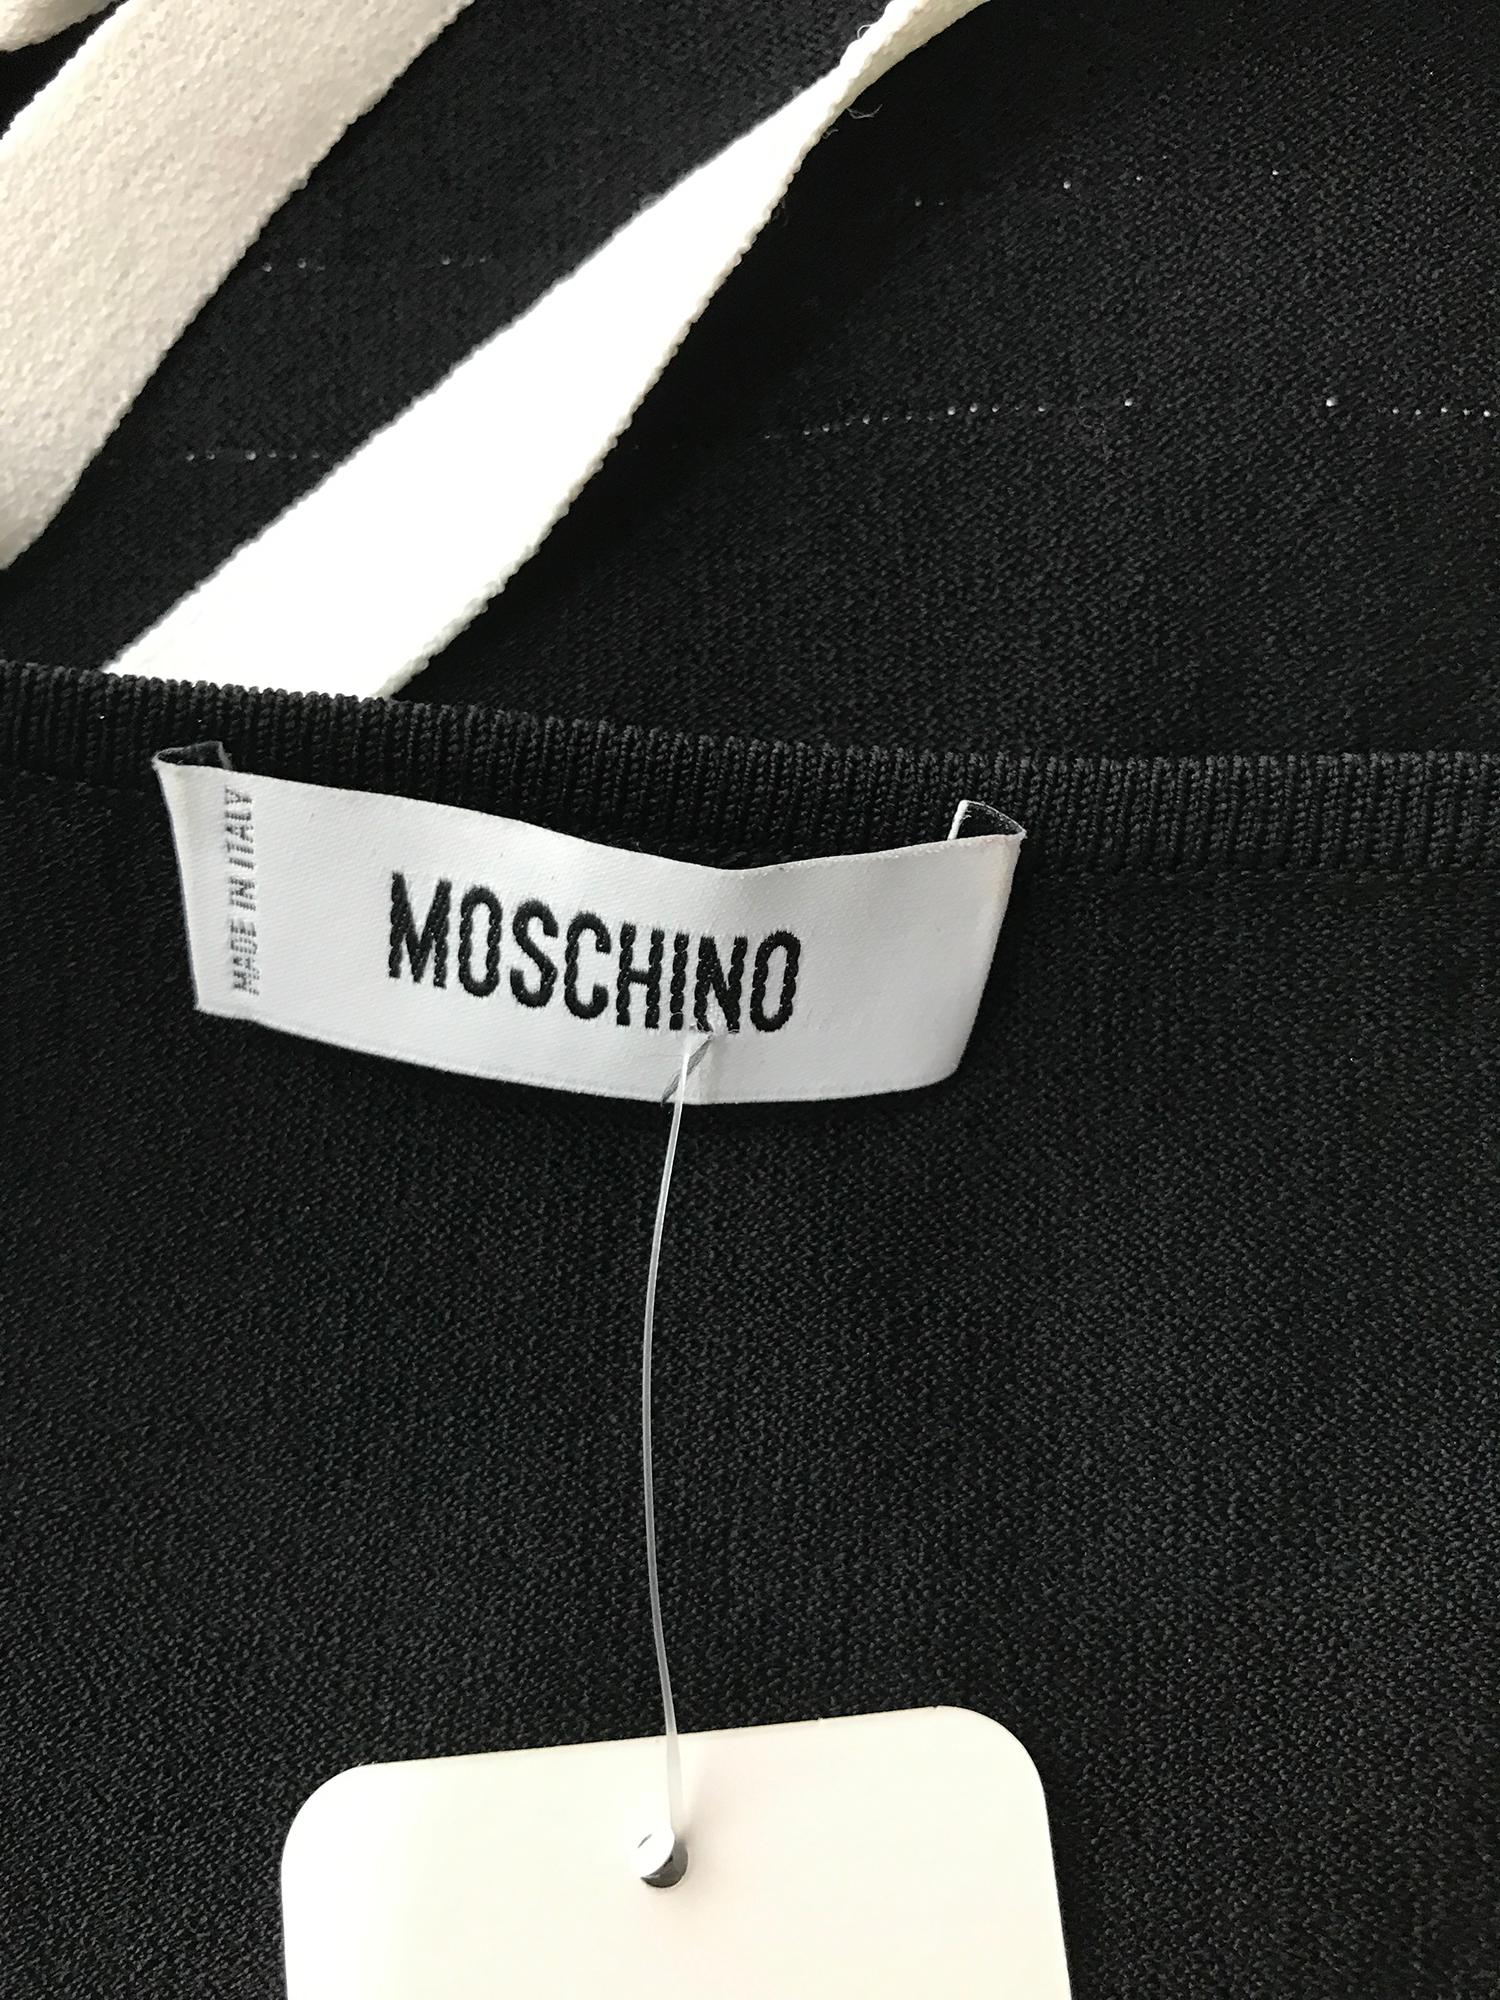 Moschino Black & White Stripe Knit Bare Back Top 6